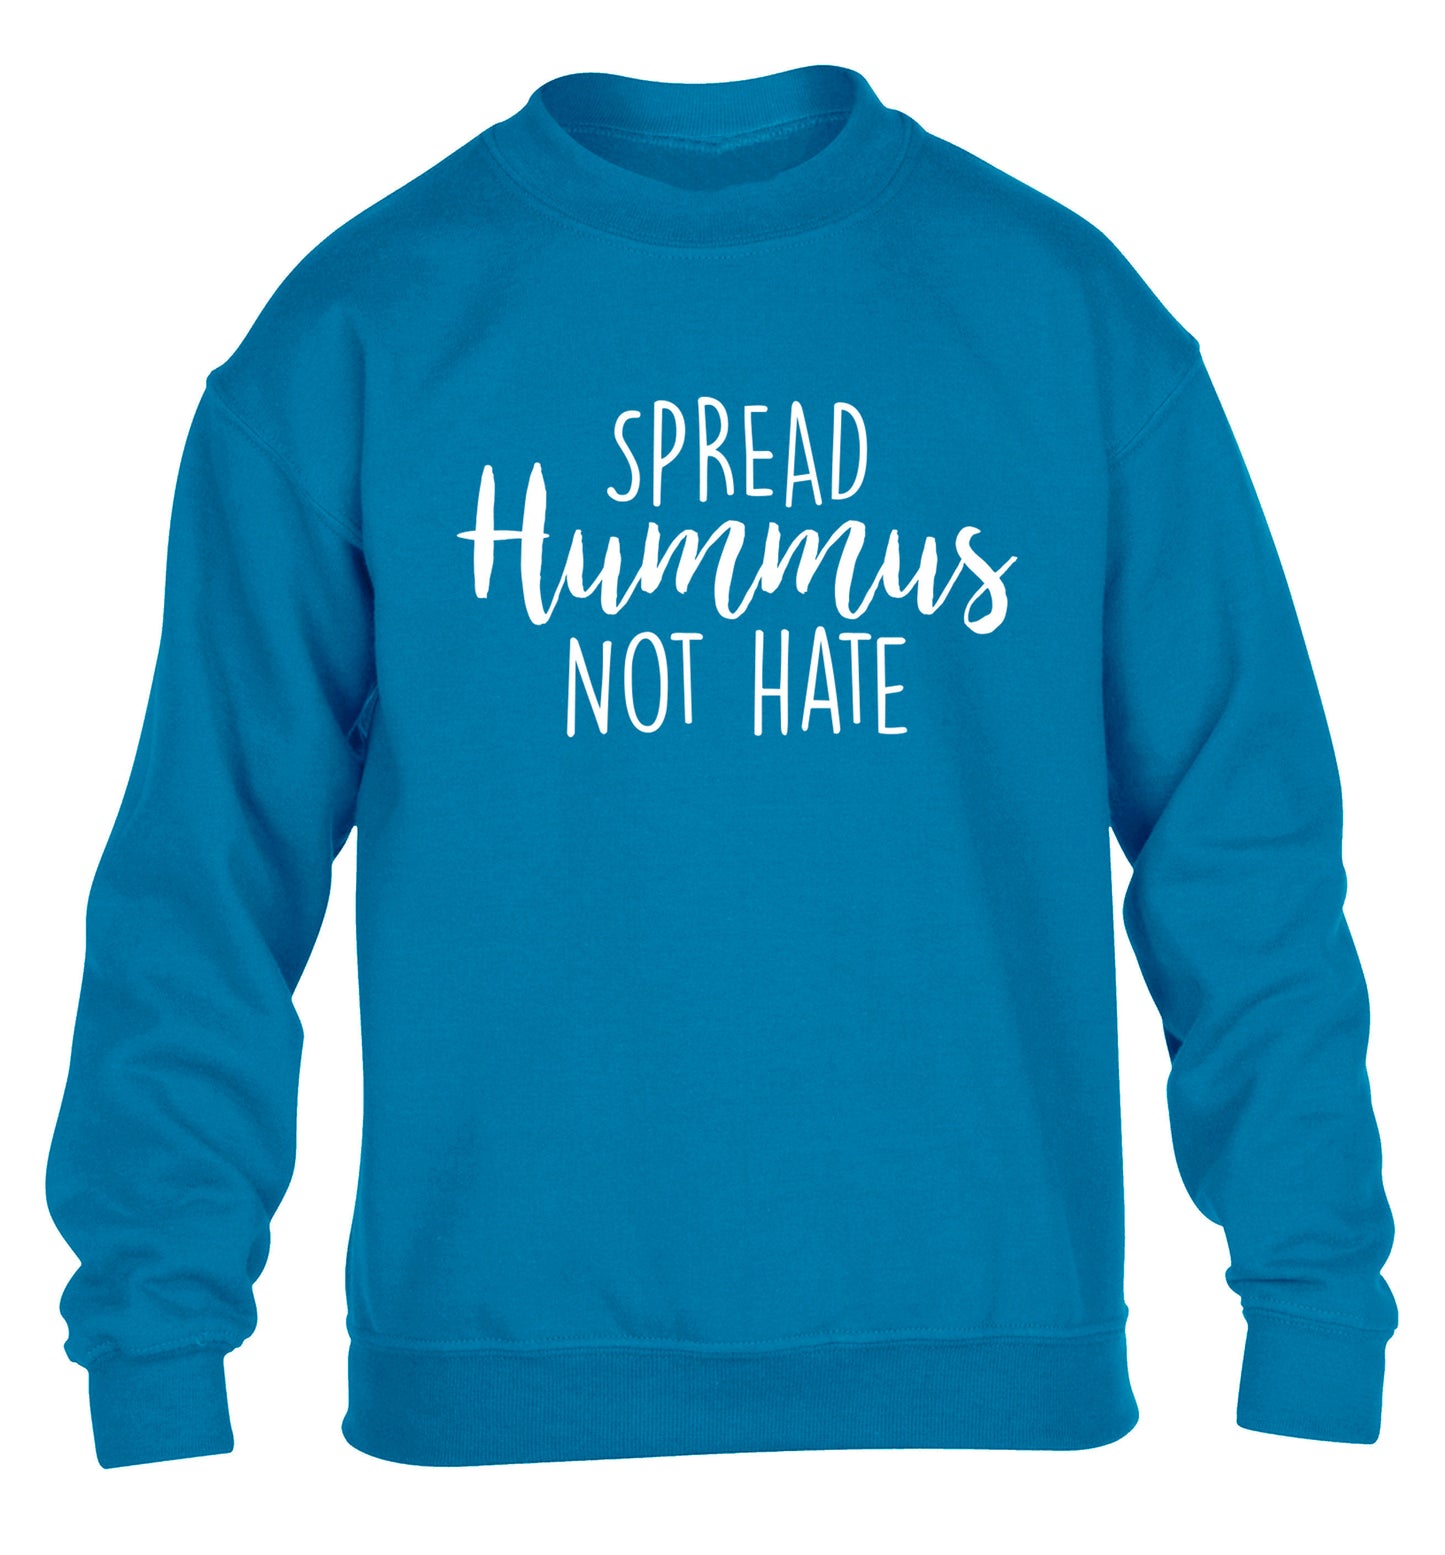 Spread hummus not hate script text children's blue sweater 12-14 Years